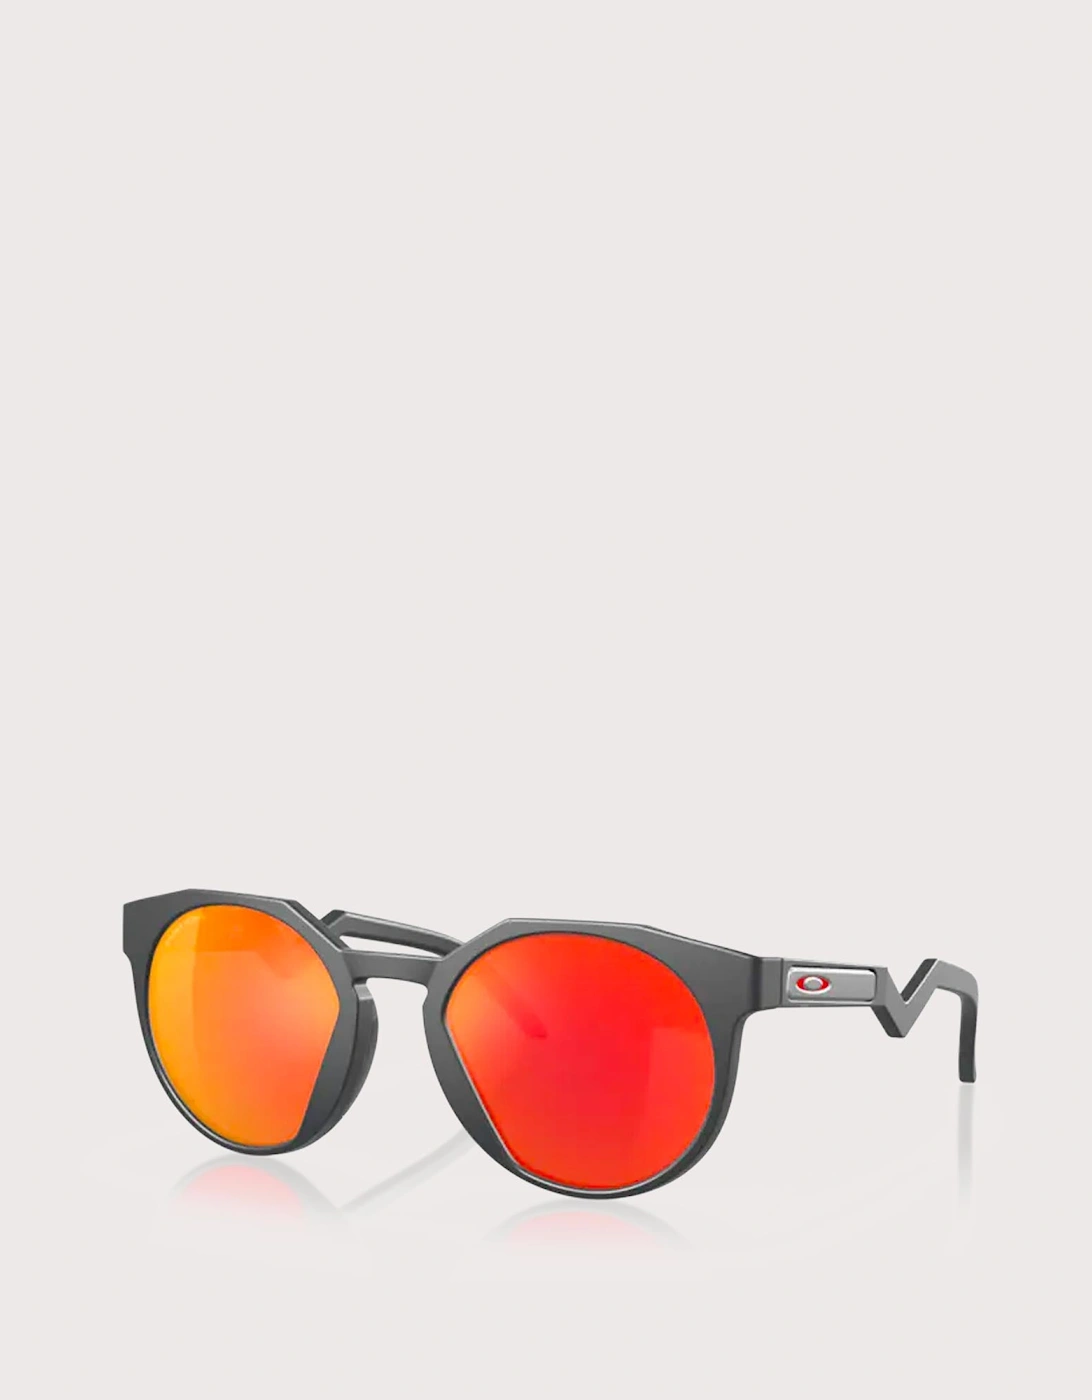 HSTN Sunglasses, 9 of 8